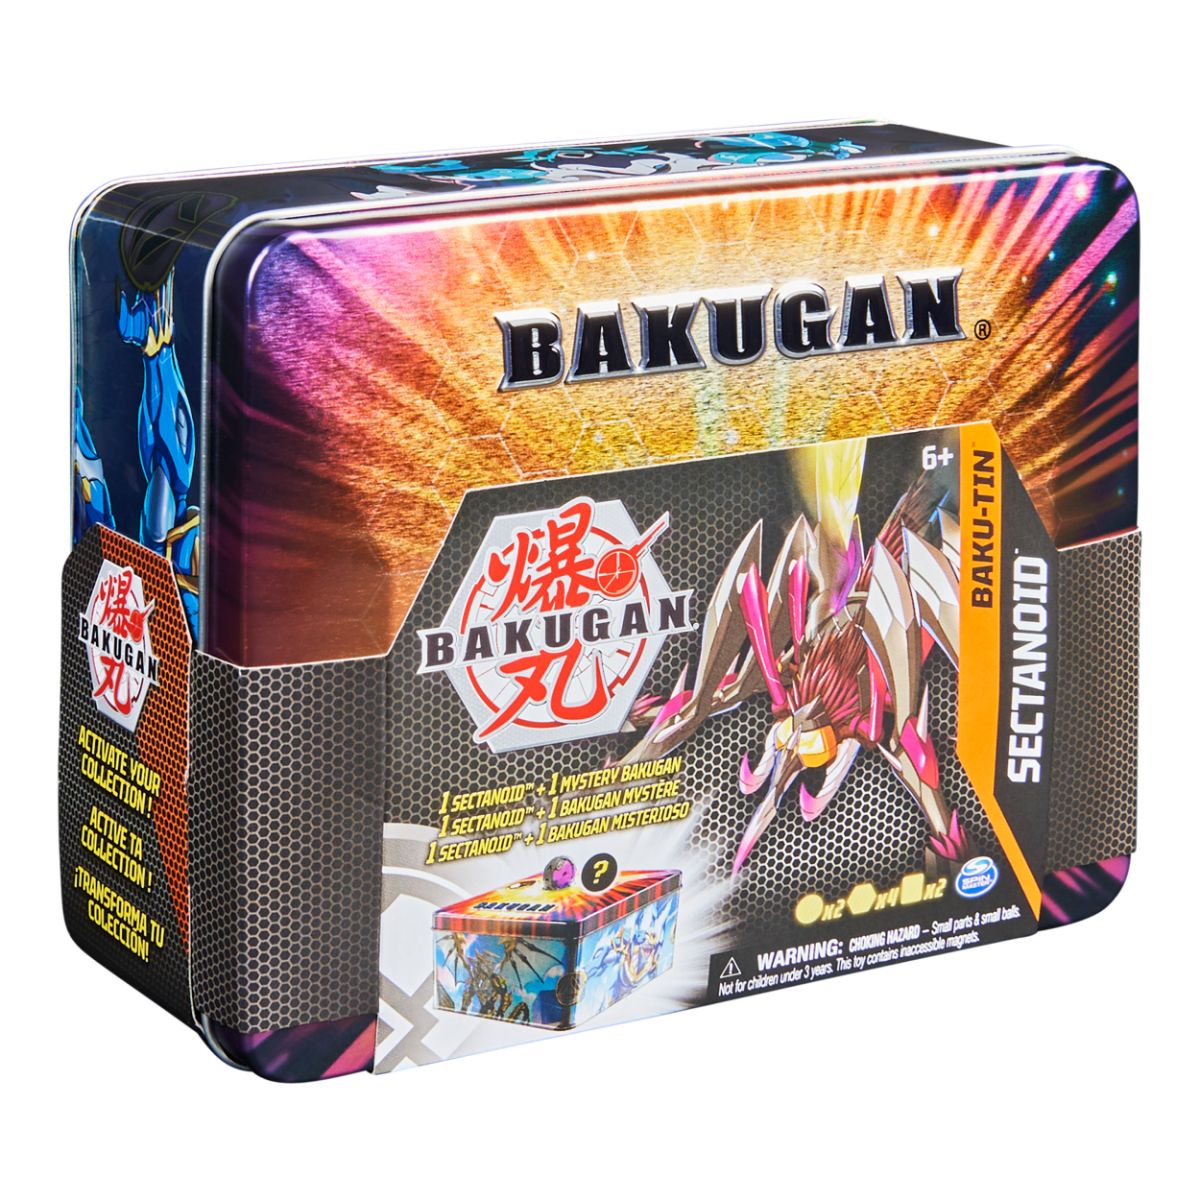 Set de joaca Bakugan, cu 2 Bakugani surpriza in cutie de metal, S4 Bakugan